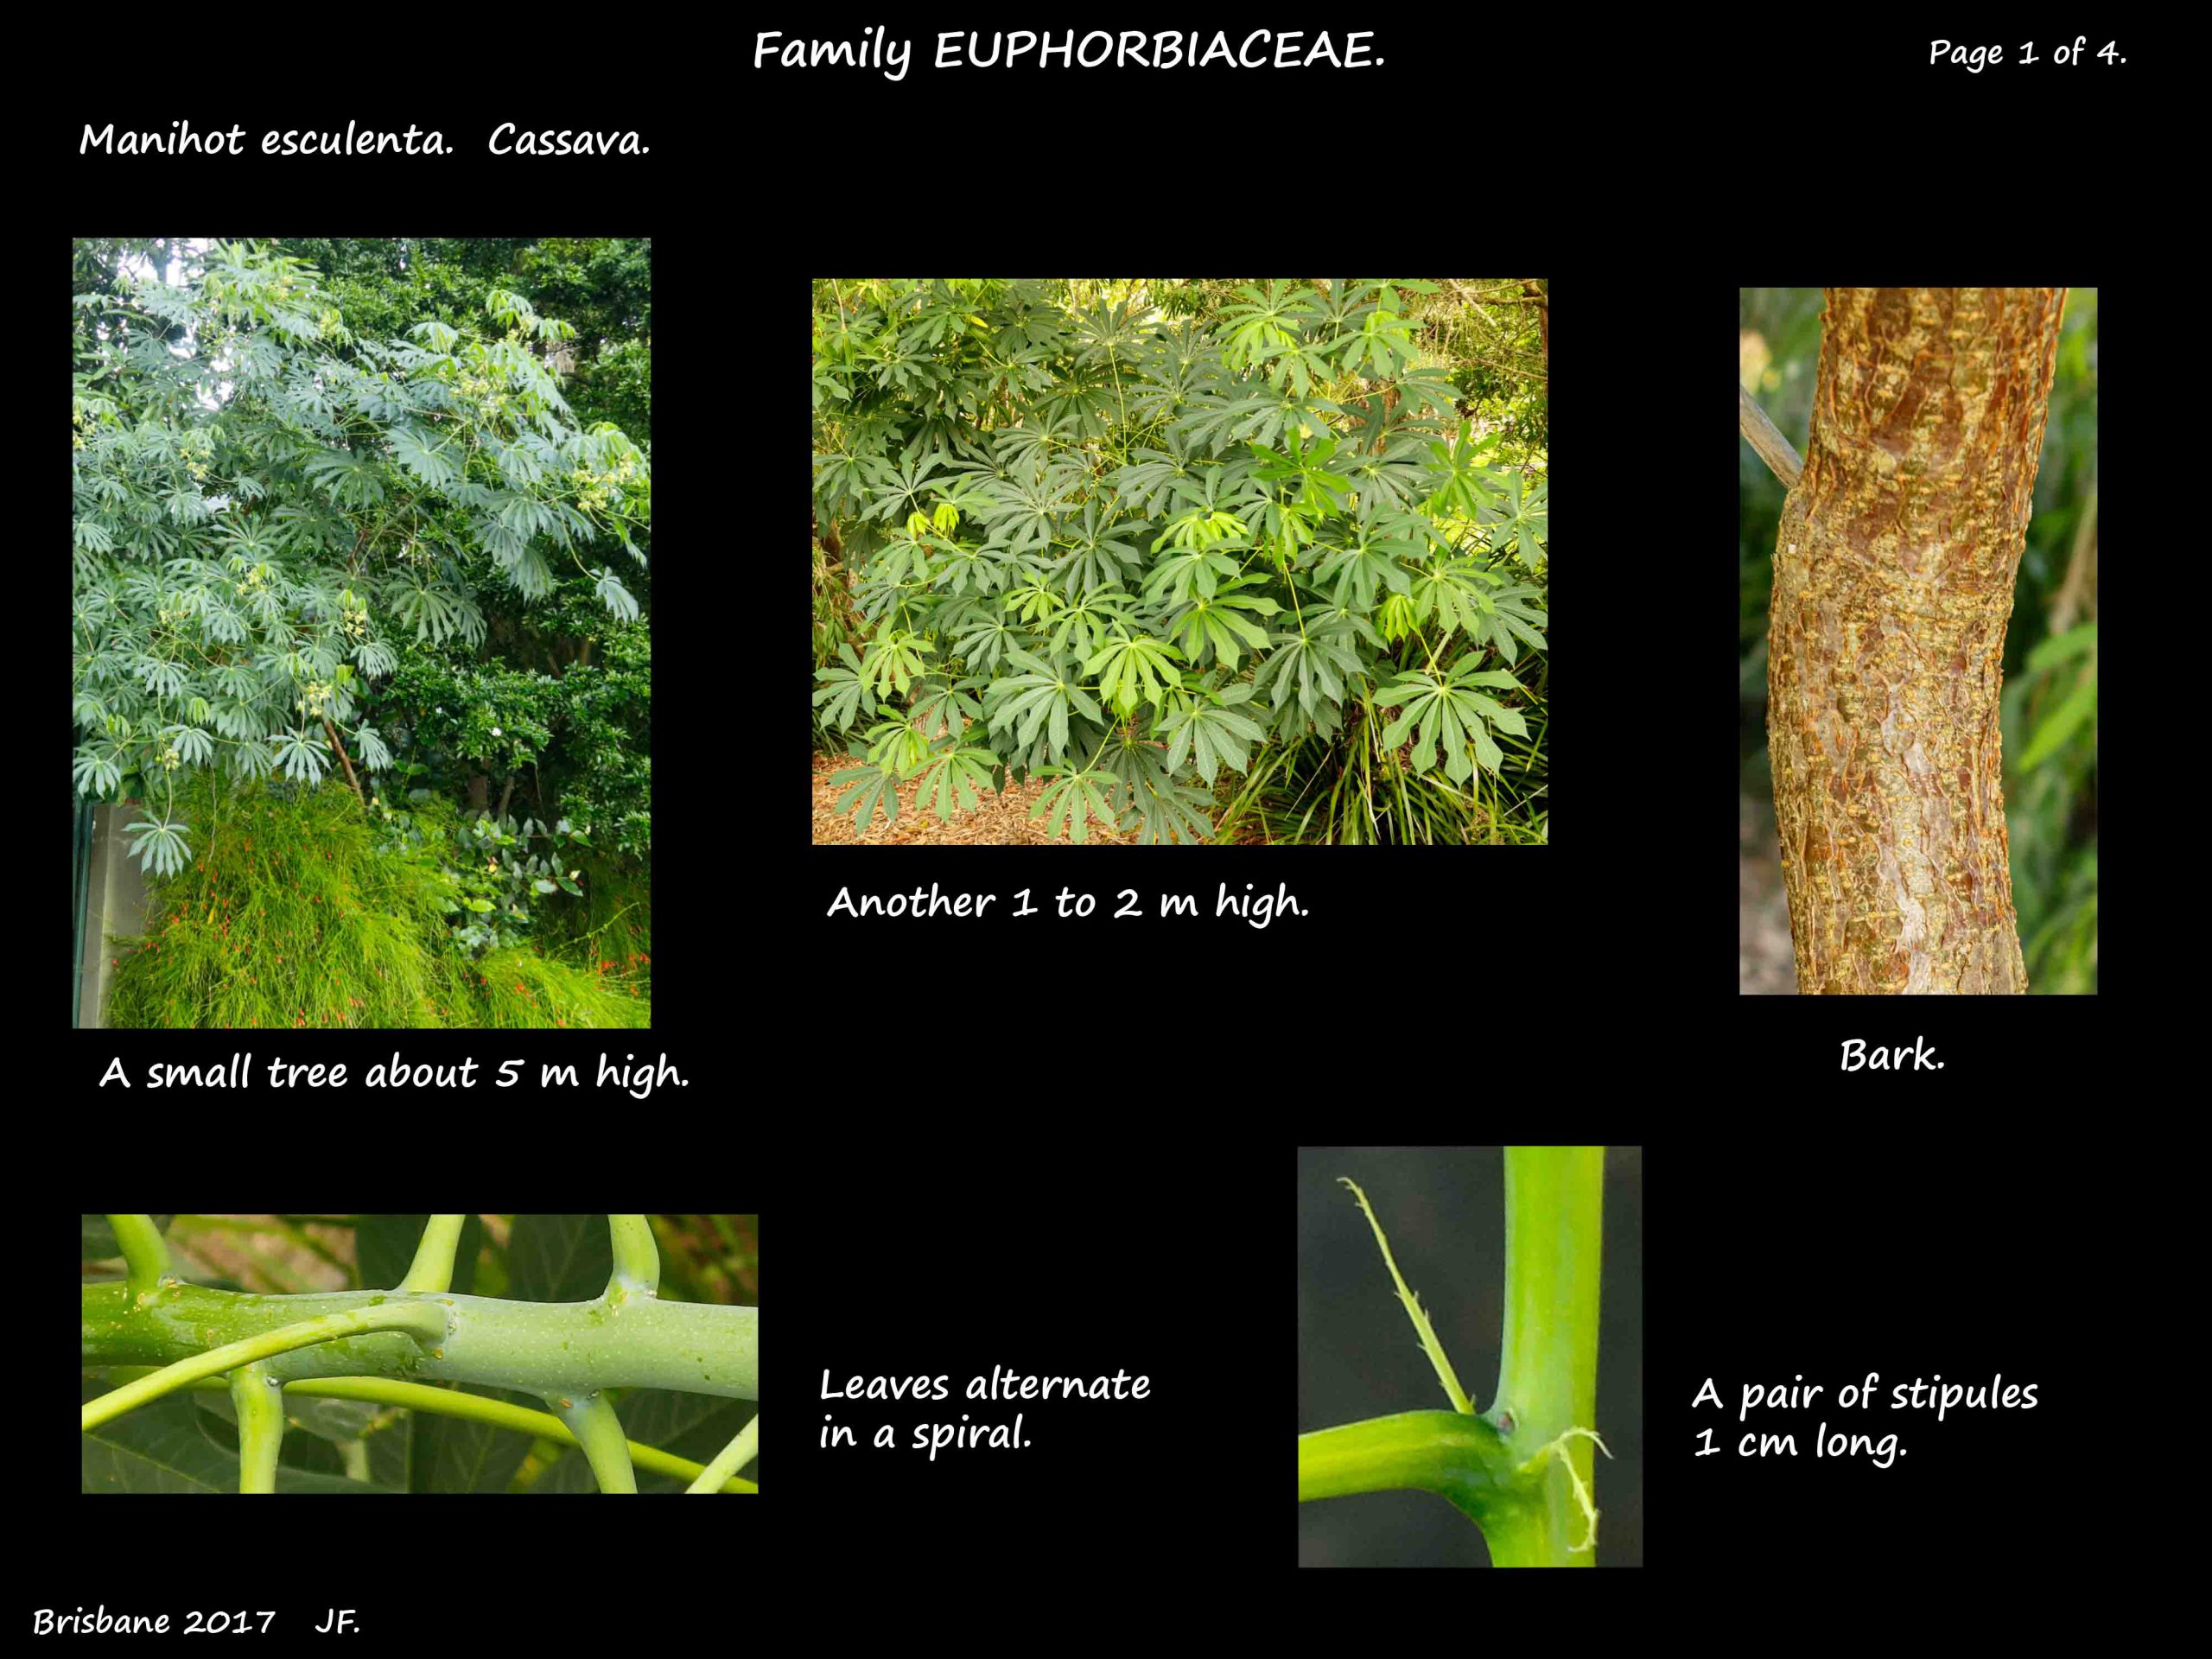 1 Cassava tree & stipules